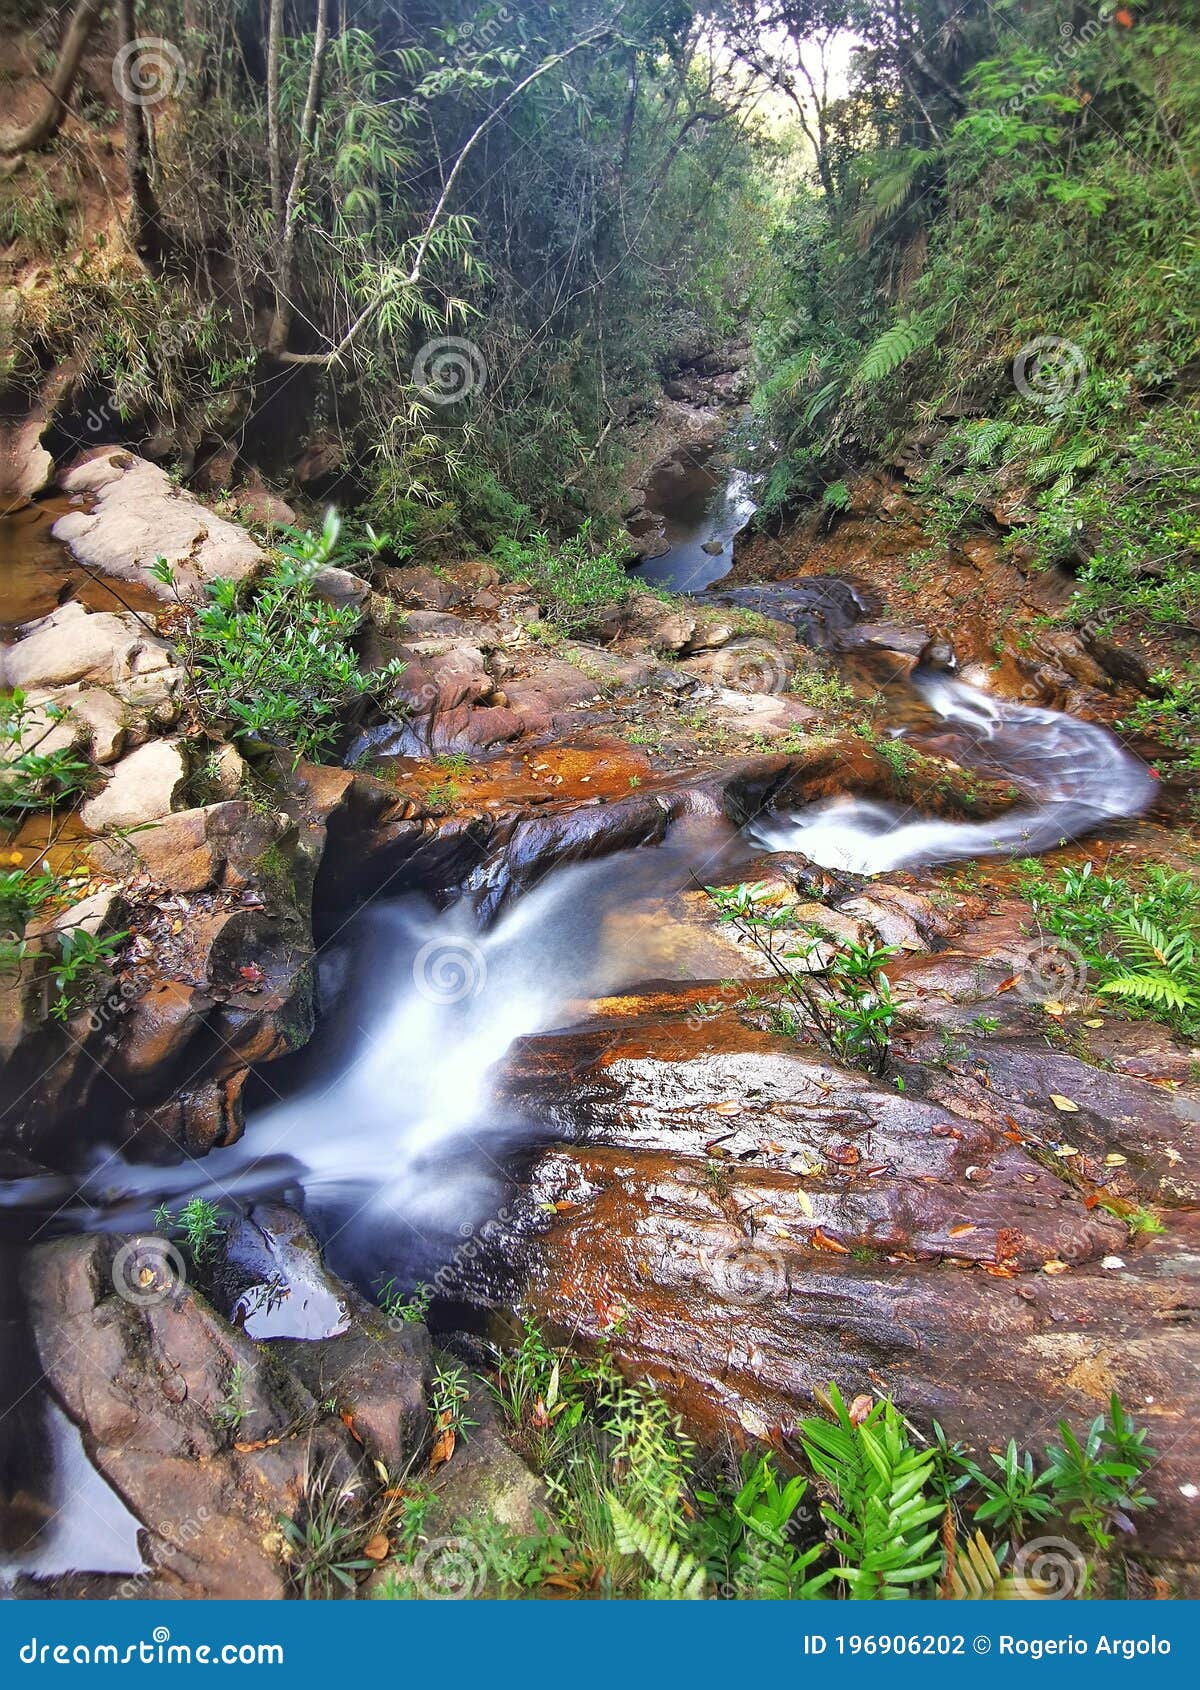 waterfall cruzados at acuruÃÂ­, minas gerais, brazil